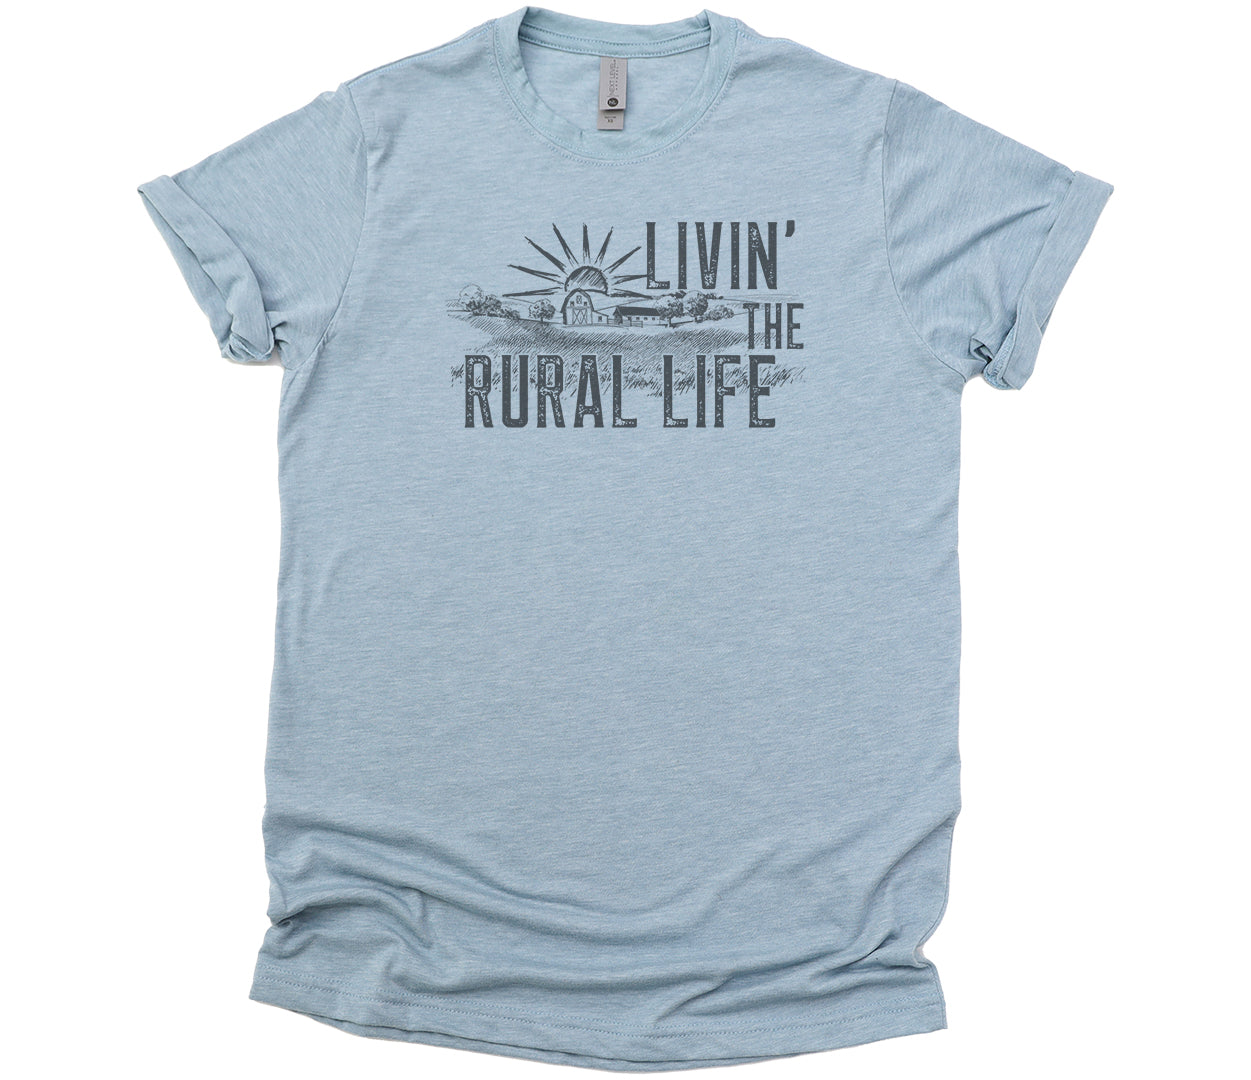 Livin' the Rural Life T-Shirt